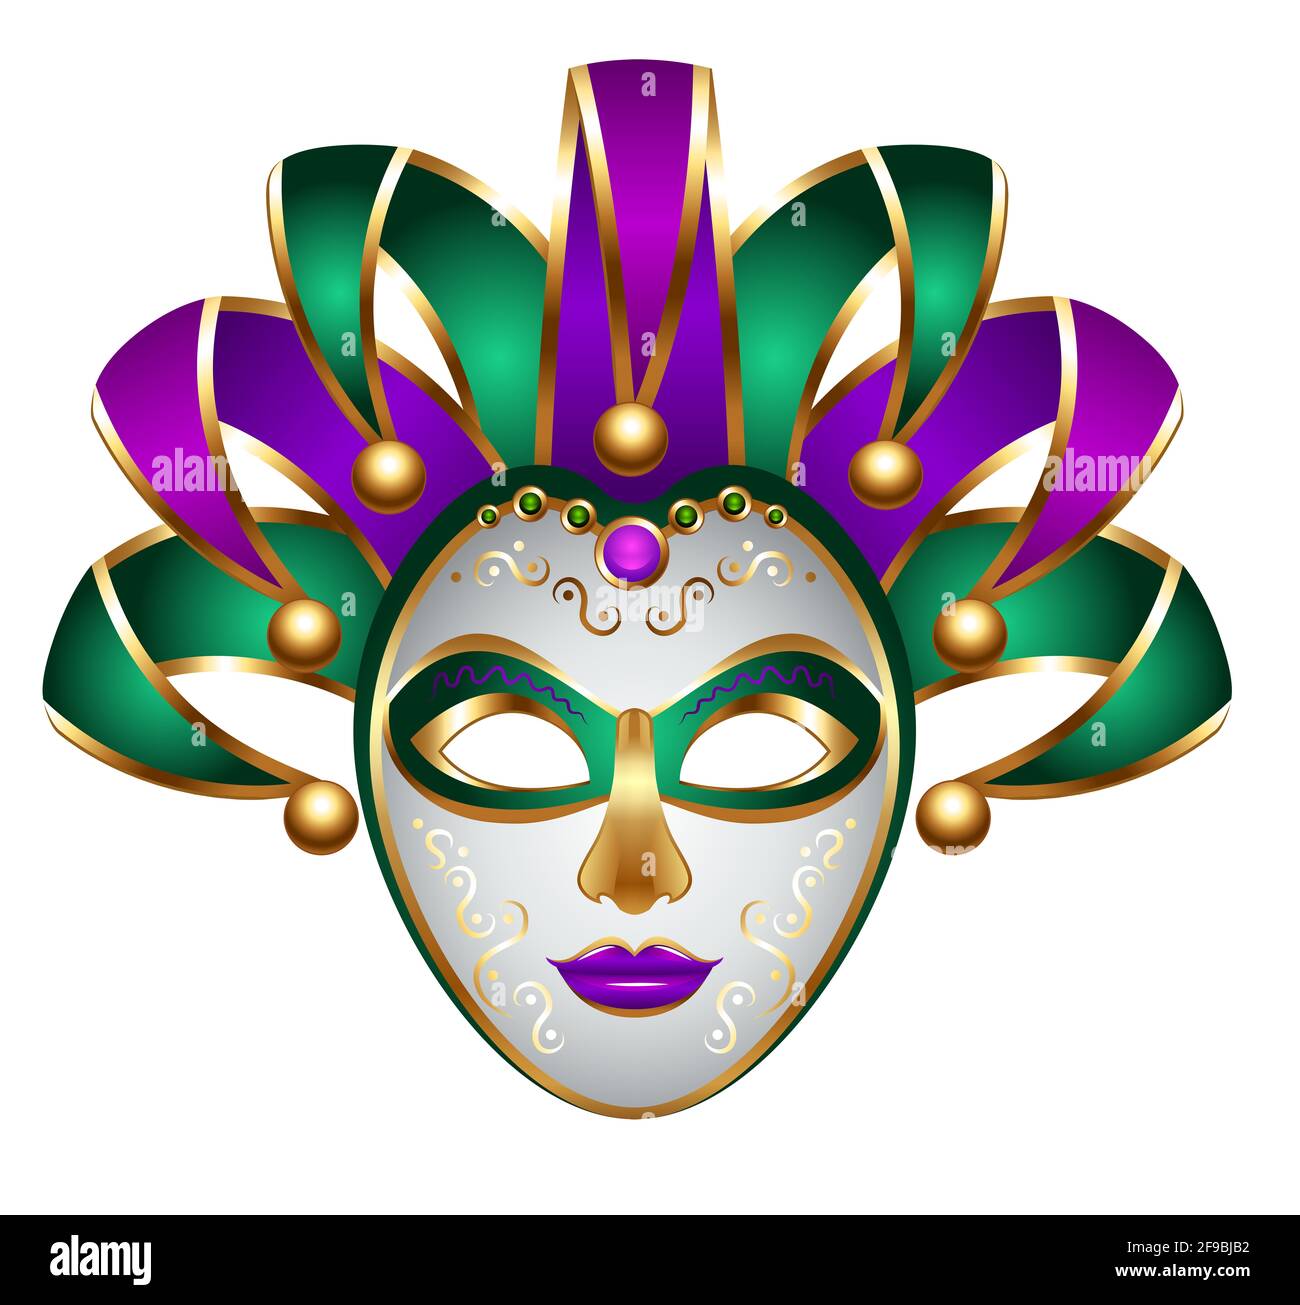 green purple carnival mask mardi gras festival costume illustration Stock Photo